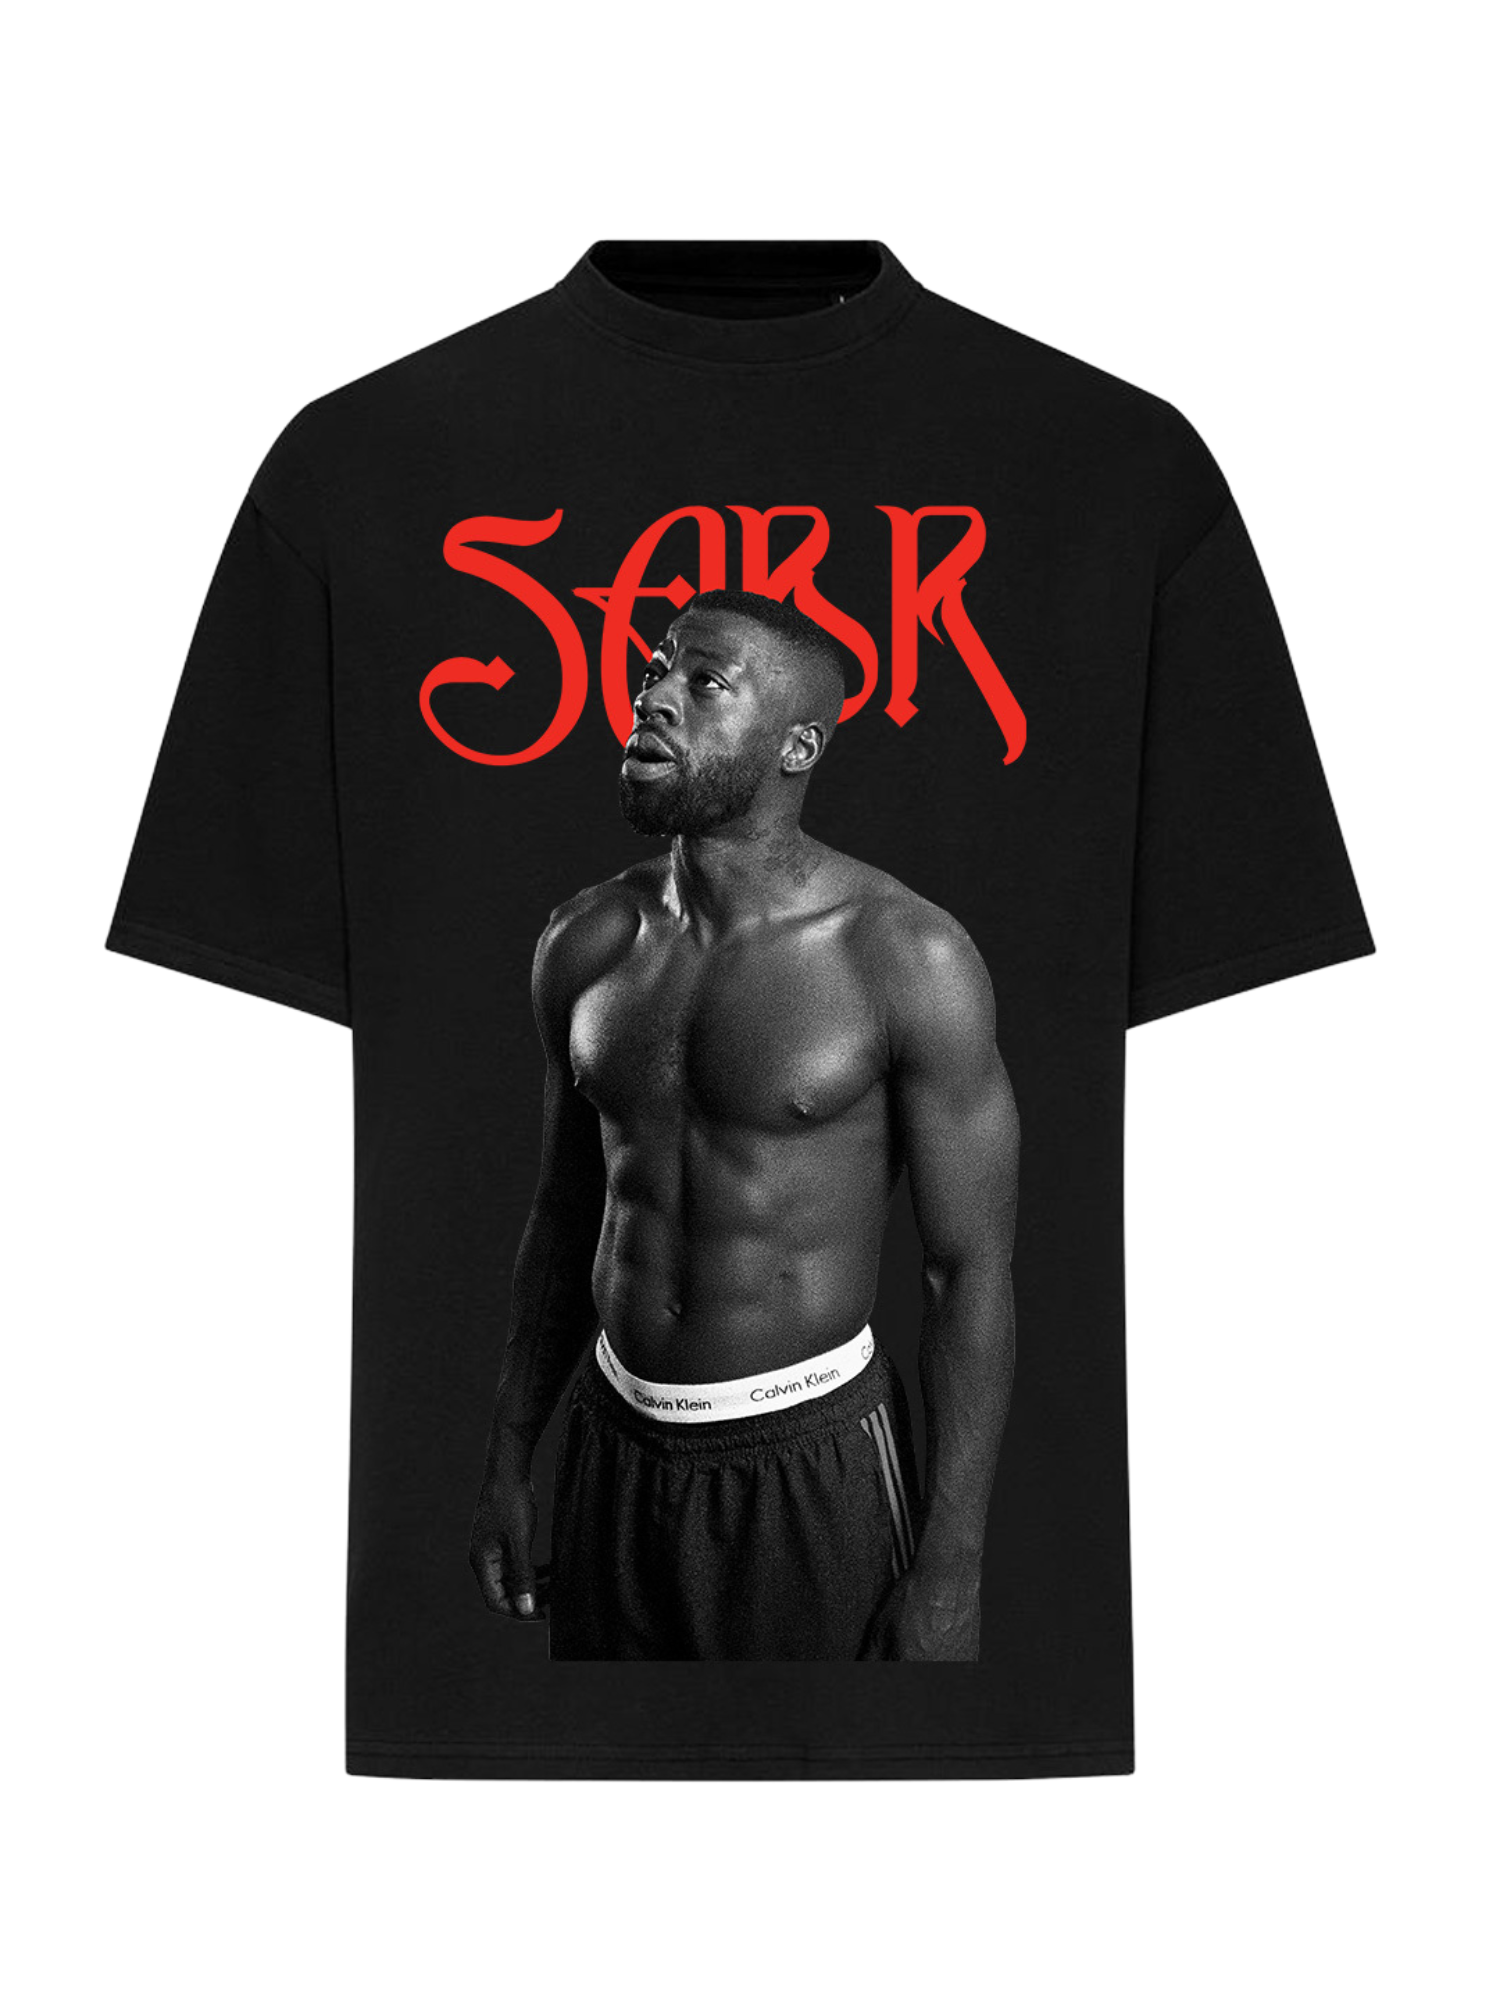 Santa - Sabr T-Shirt